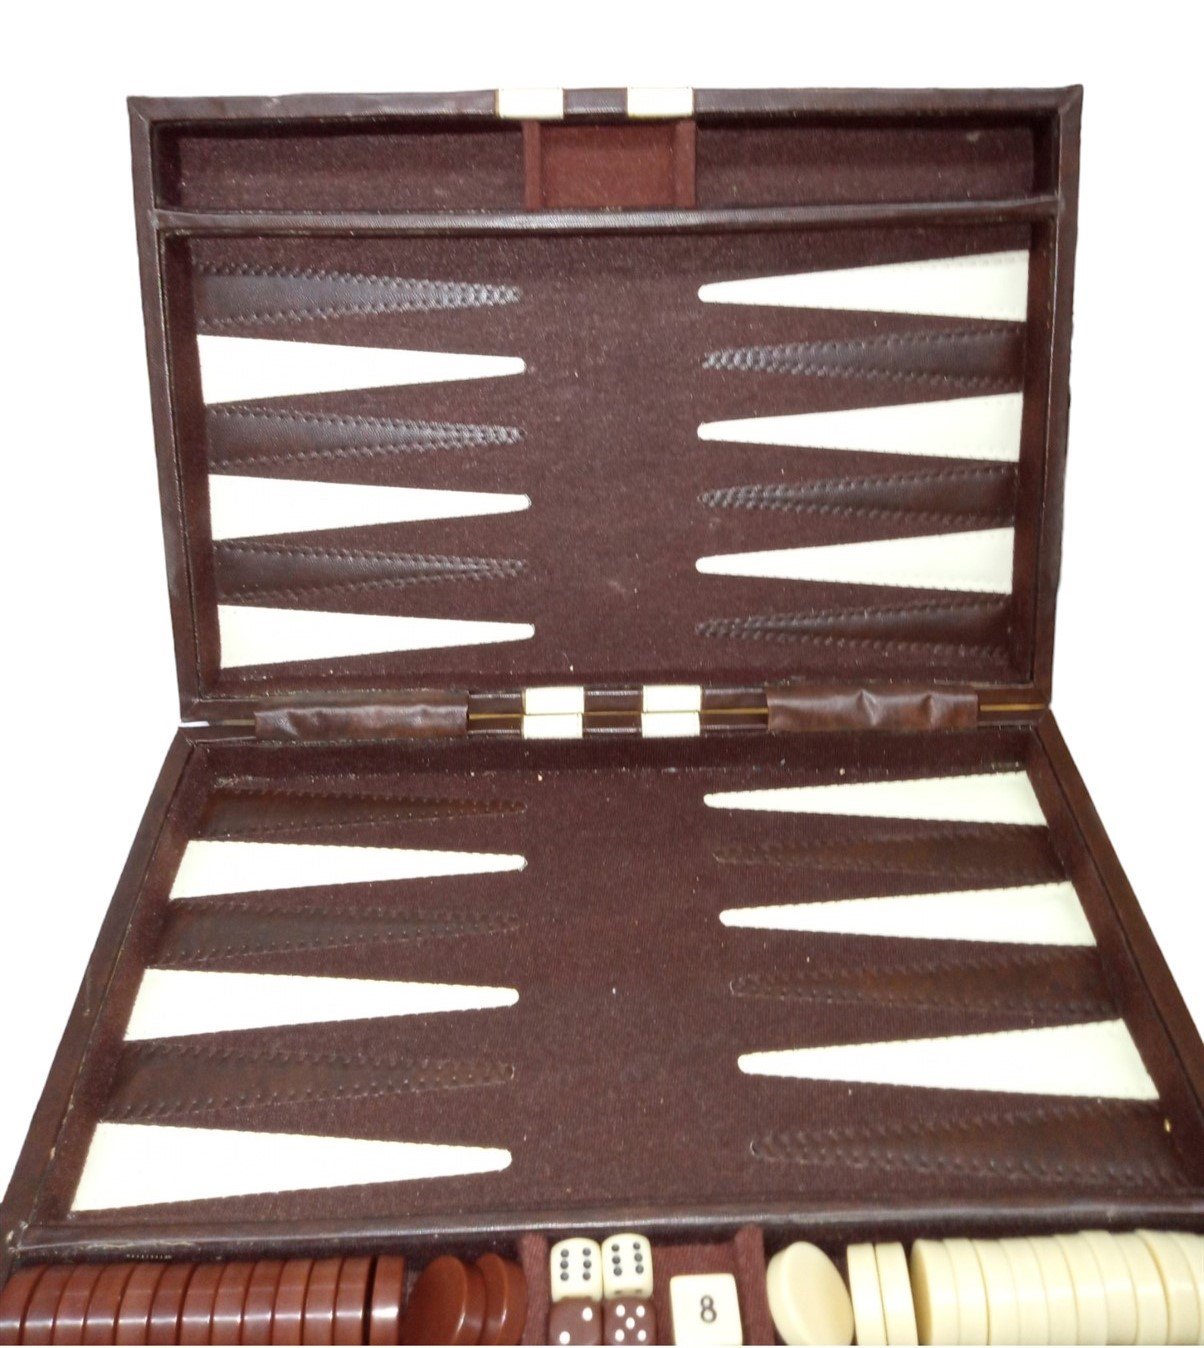 Backgammon Portable Board Game Vintage Collectible Nostalgic Family Game Night